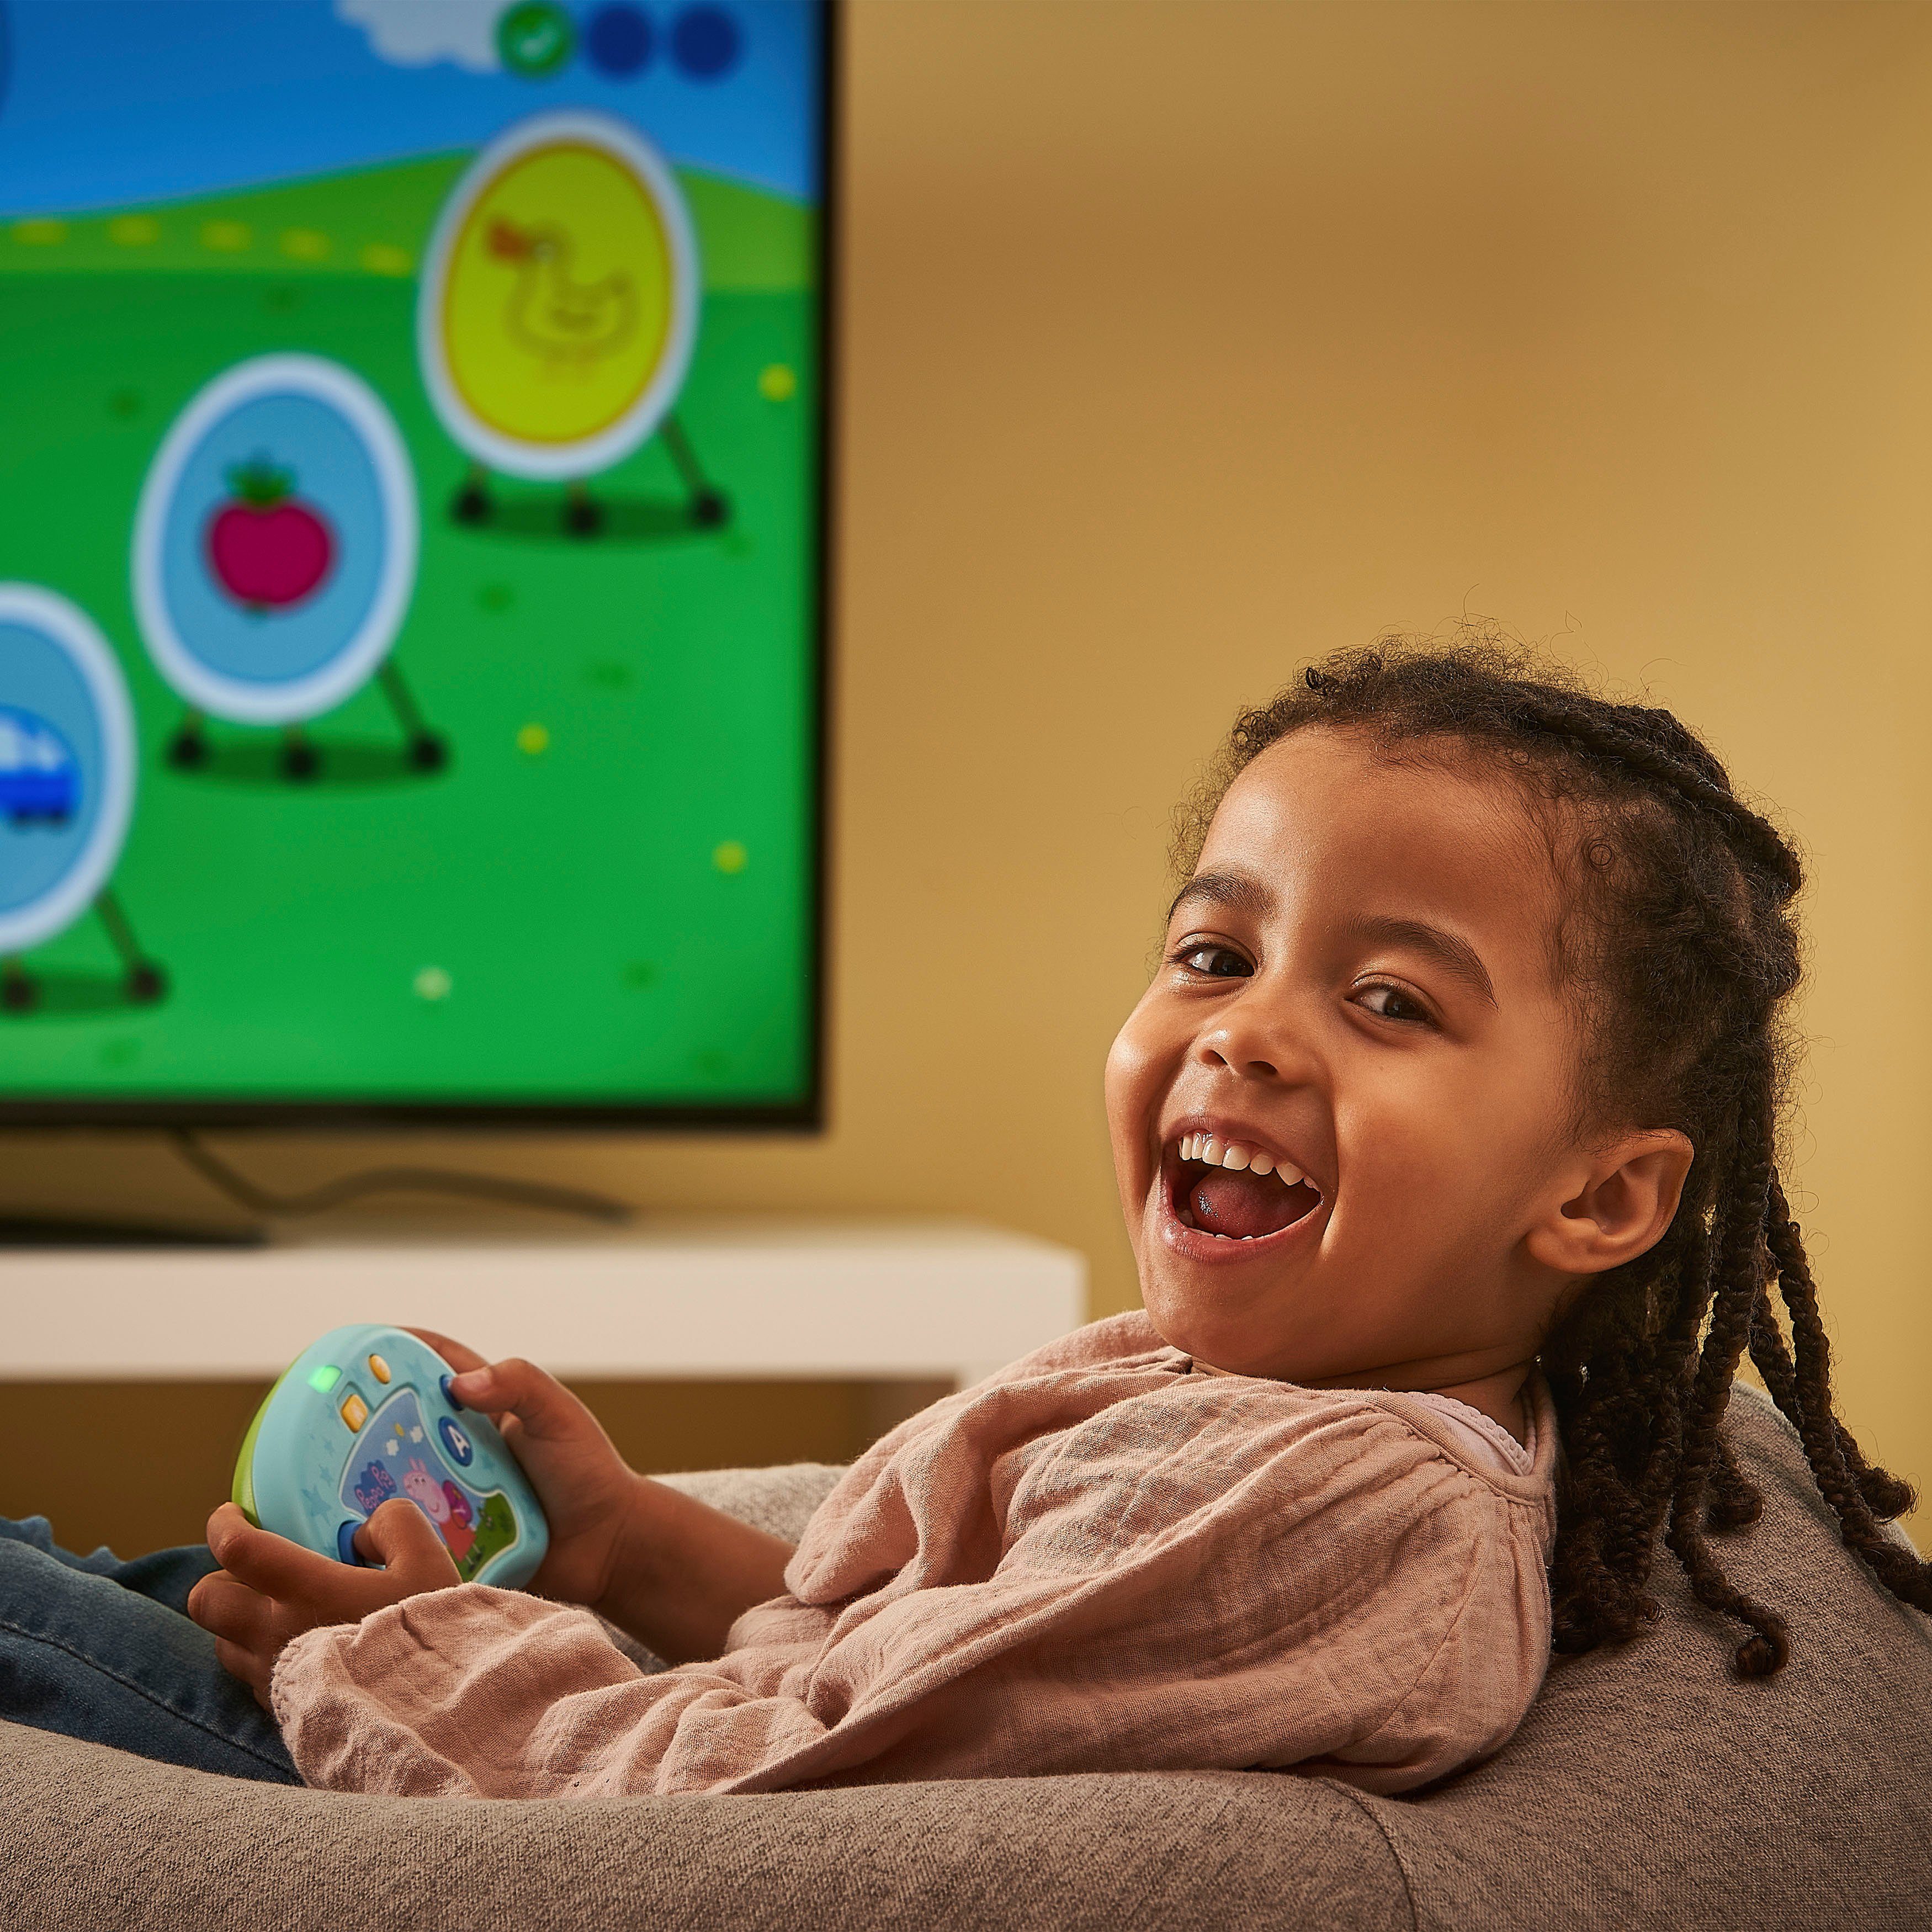 ABC Kindercomputer Smile TV-Lernkonsole Vtech® Pig, Peppa